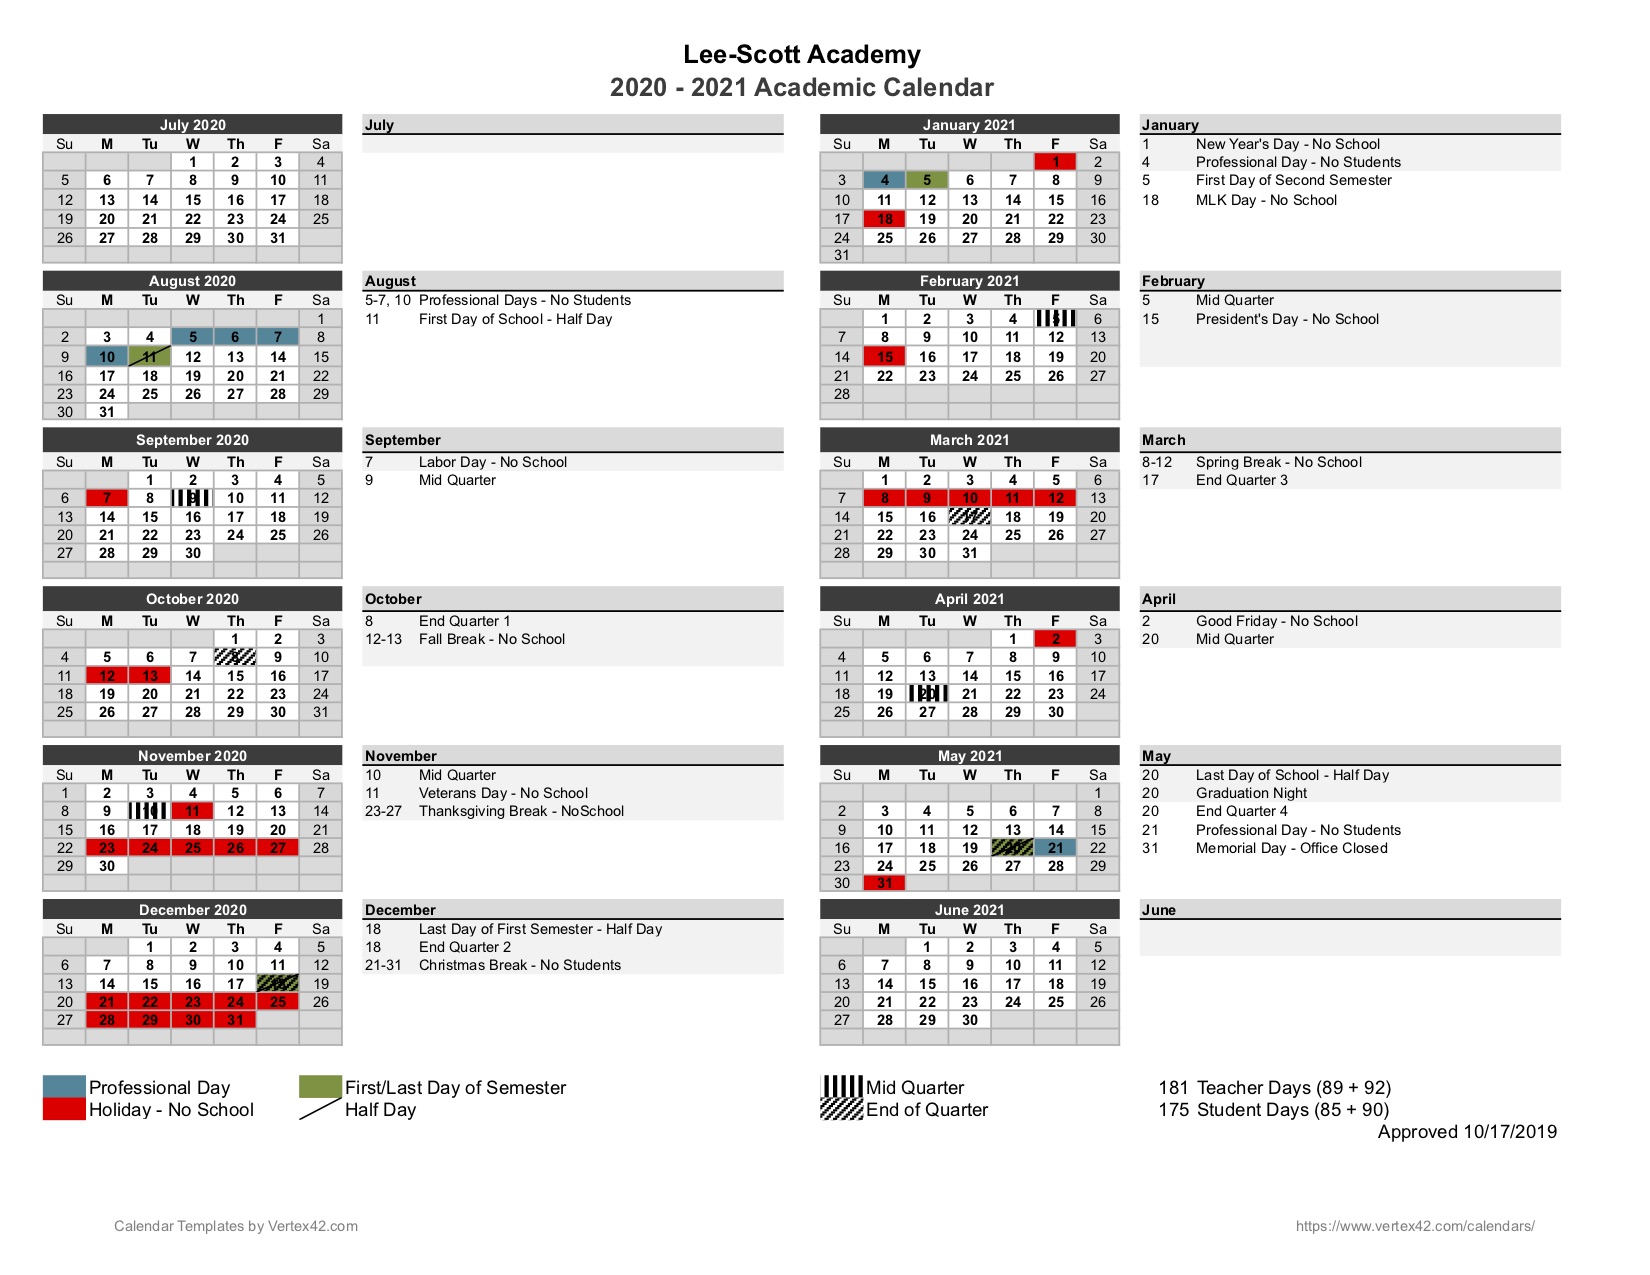 university of alabama calendar 2021 Academic Calendar Lee Scott Academy university of alabama calendar 2021